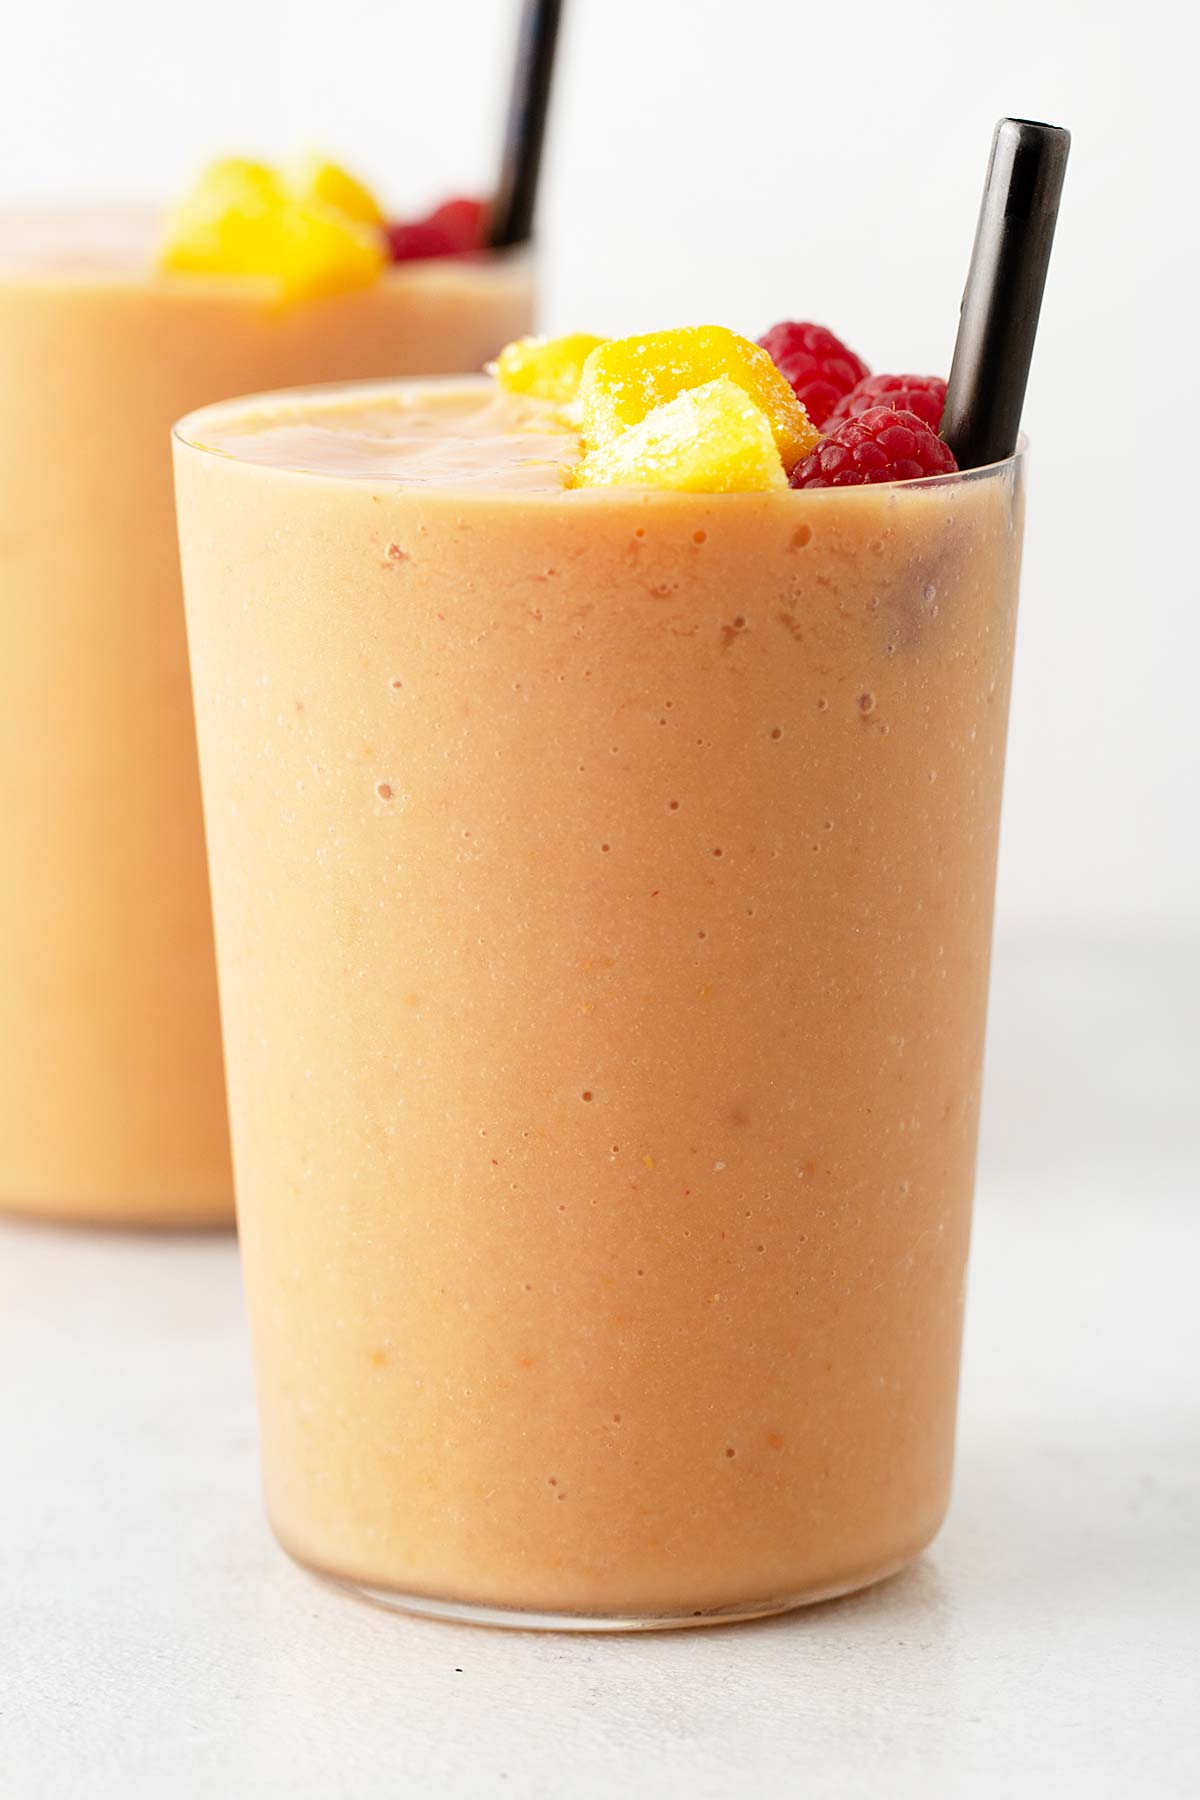 Raspberry mango smoothie in a glass.